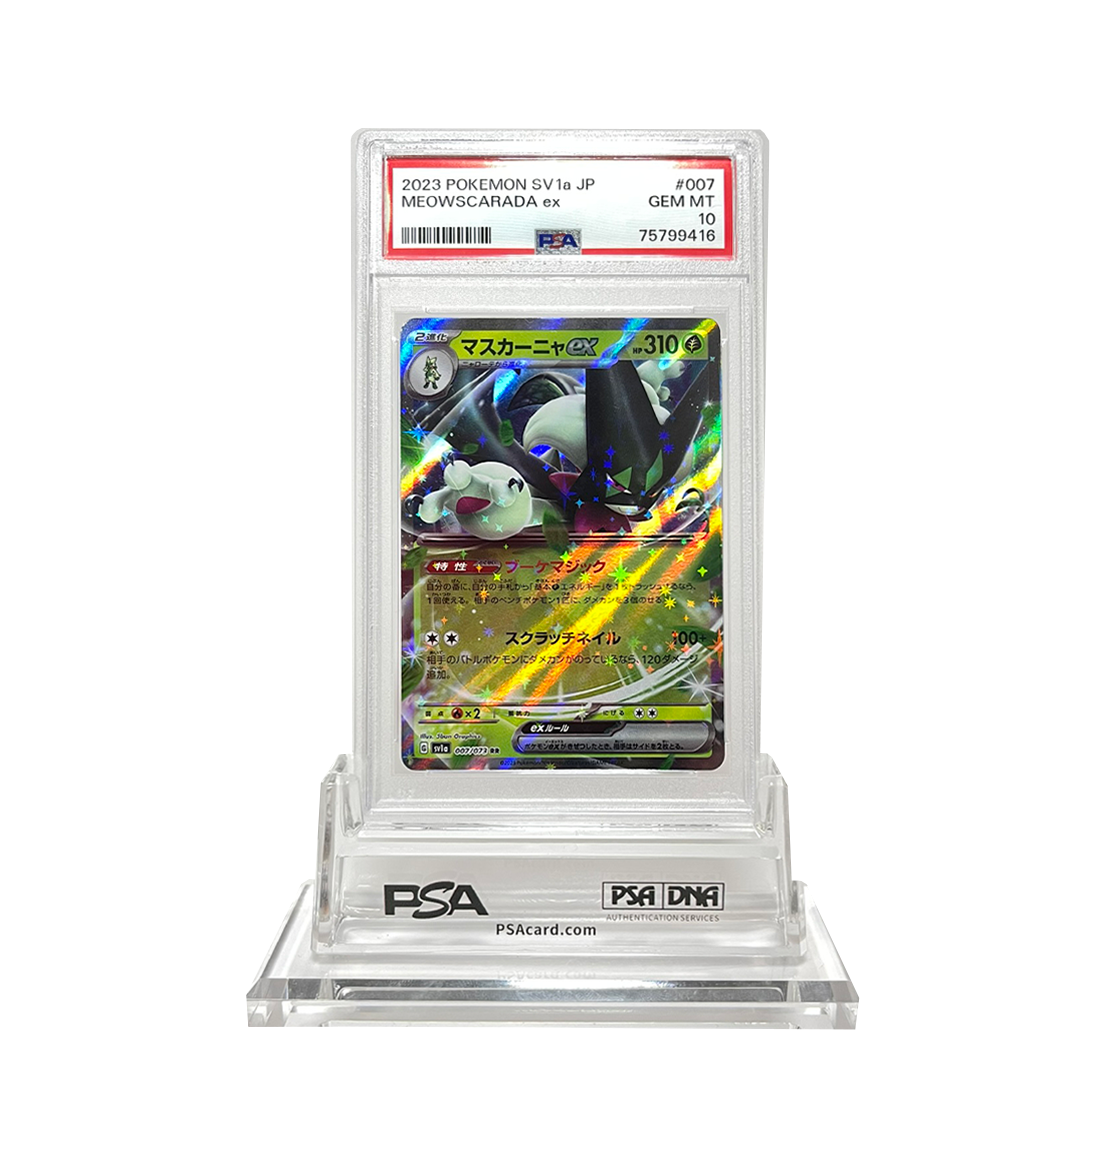 PSA 10 Meowscarada ex #007 Triplet Beat SV1a Japanese Pokemon card